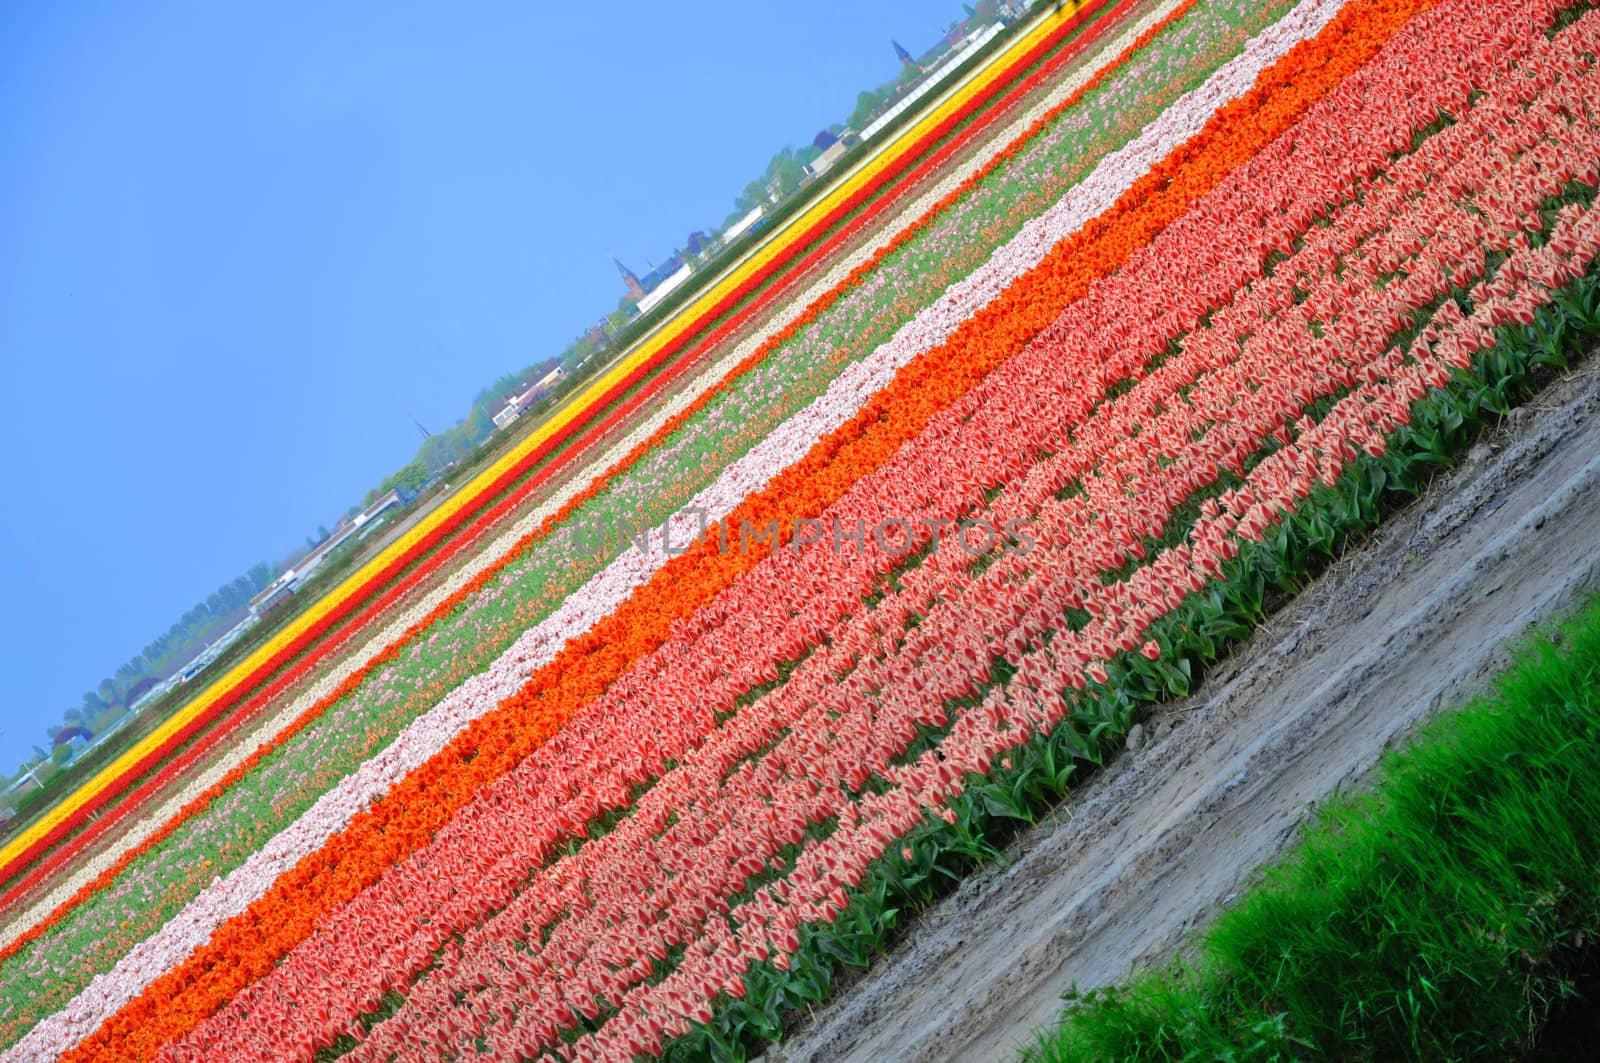 Huge field of red, pink, white, yellow tulips near Keukenhof park in Holland